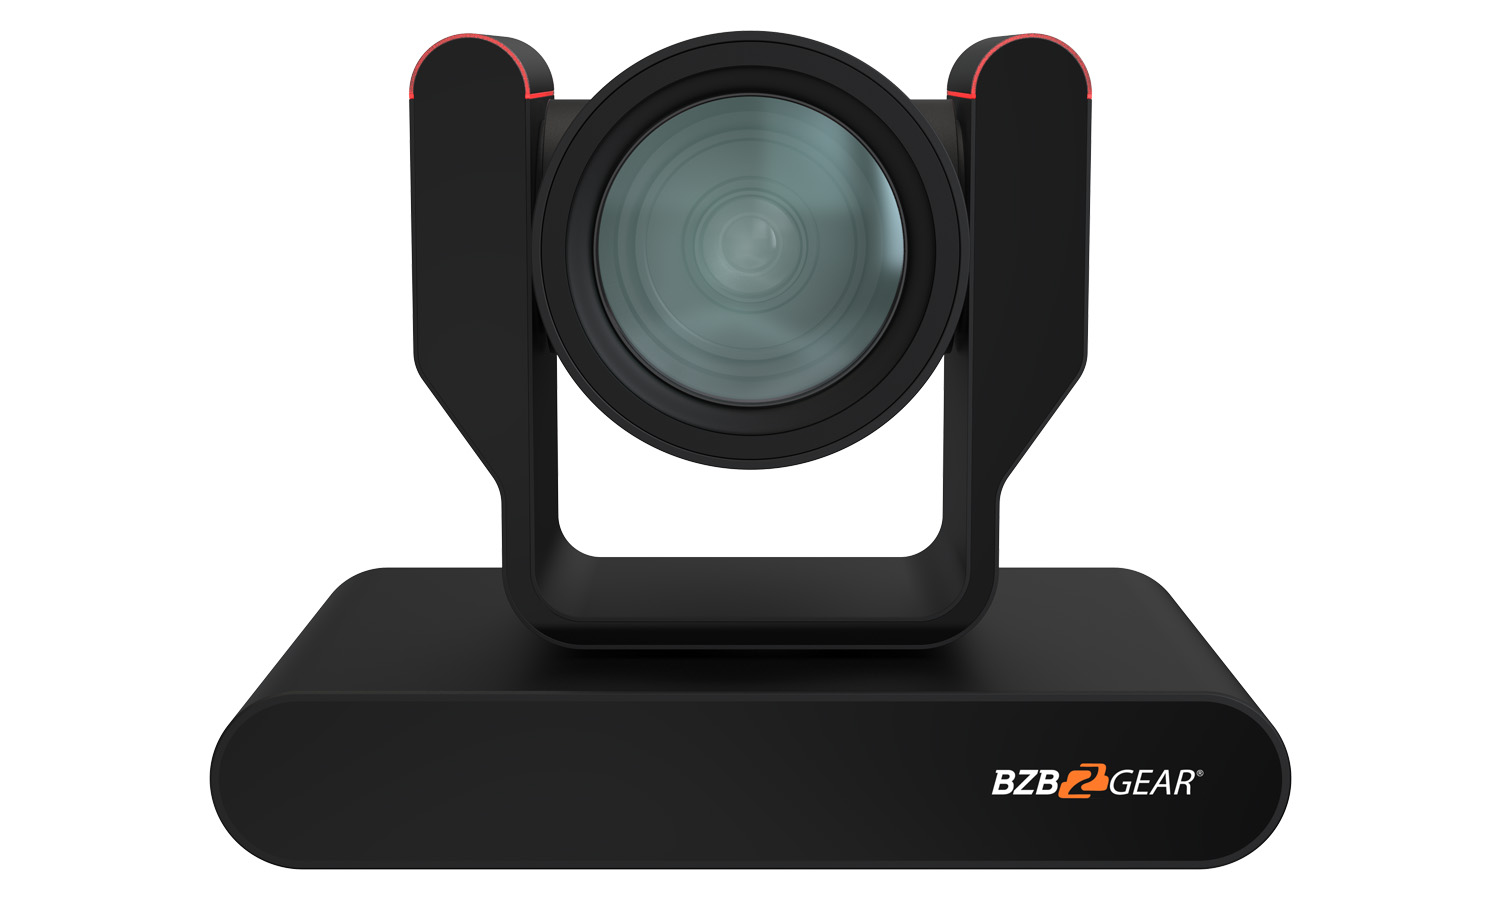 BG-ADAMO-4K25X-B 25X 4K UHD AUTO TRACKING HDMI 2.0/12G-SDI/USB 2.0/USB 3.0 Live Streaming PTZ Camera with Tally Lights (Black) by BZBGEAR